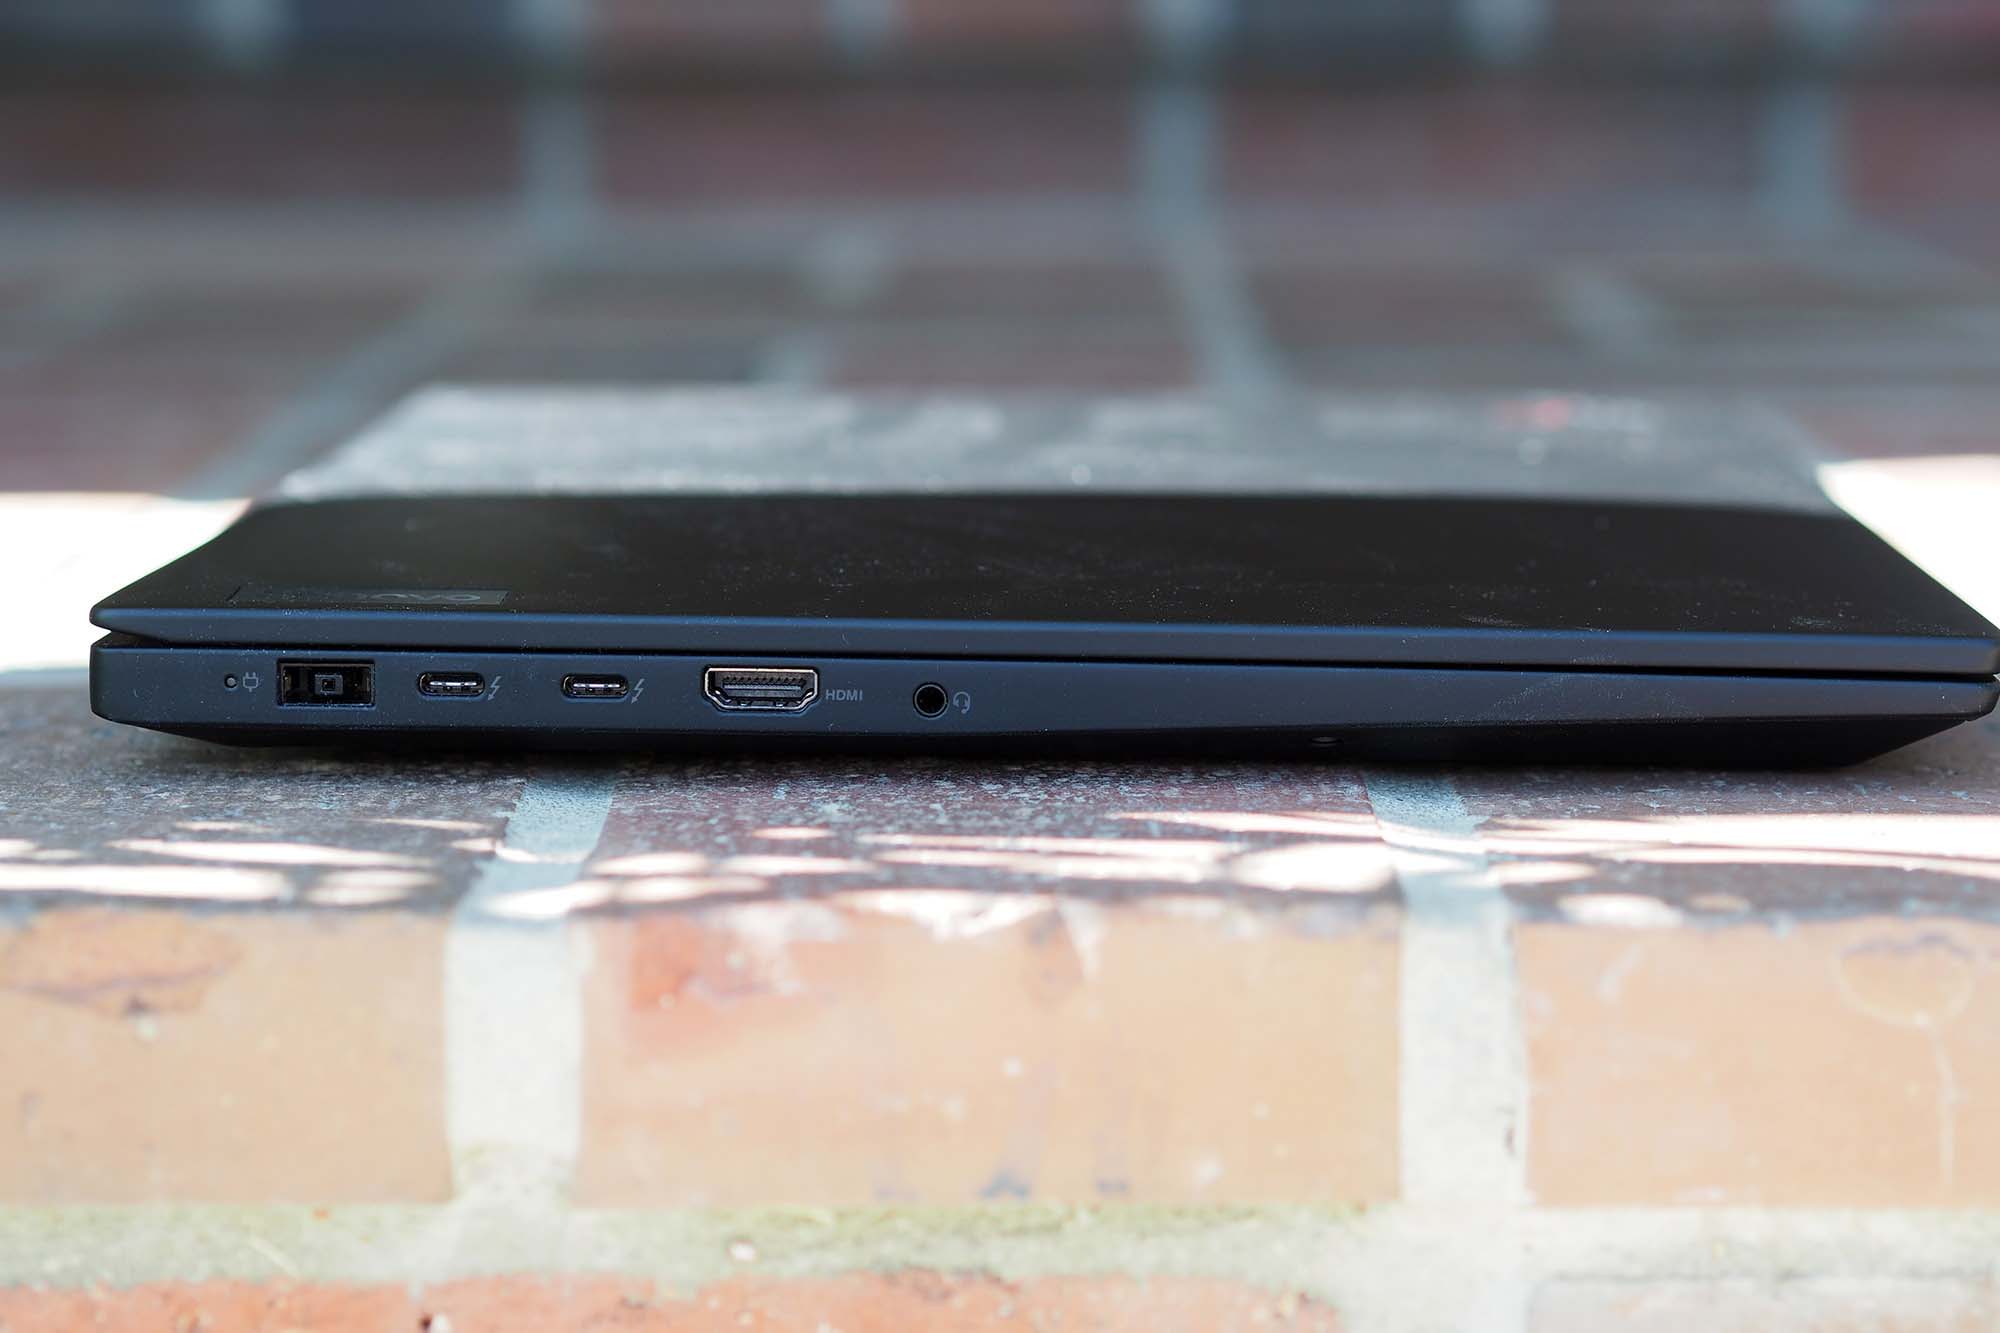 Charging plugin, 2 micro USB ports, HDMI port, and headphone jack on the Lenovo ThinkPad X1 Extreme Gen 4.